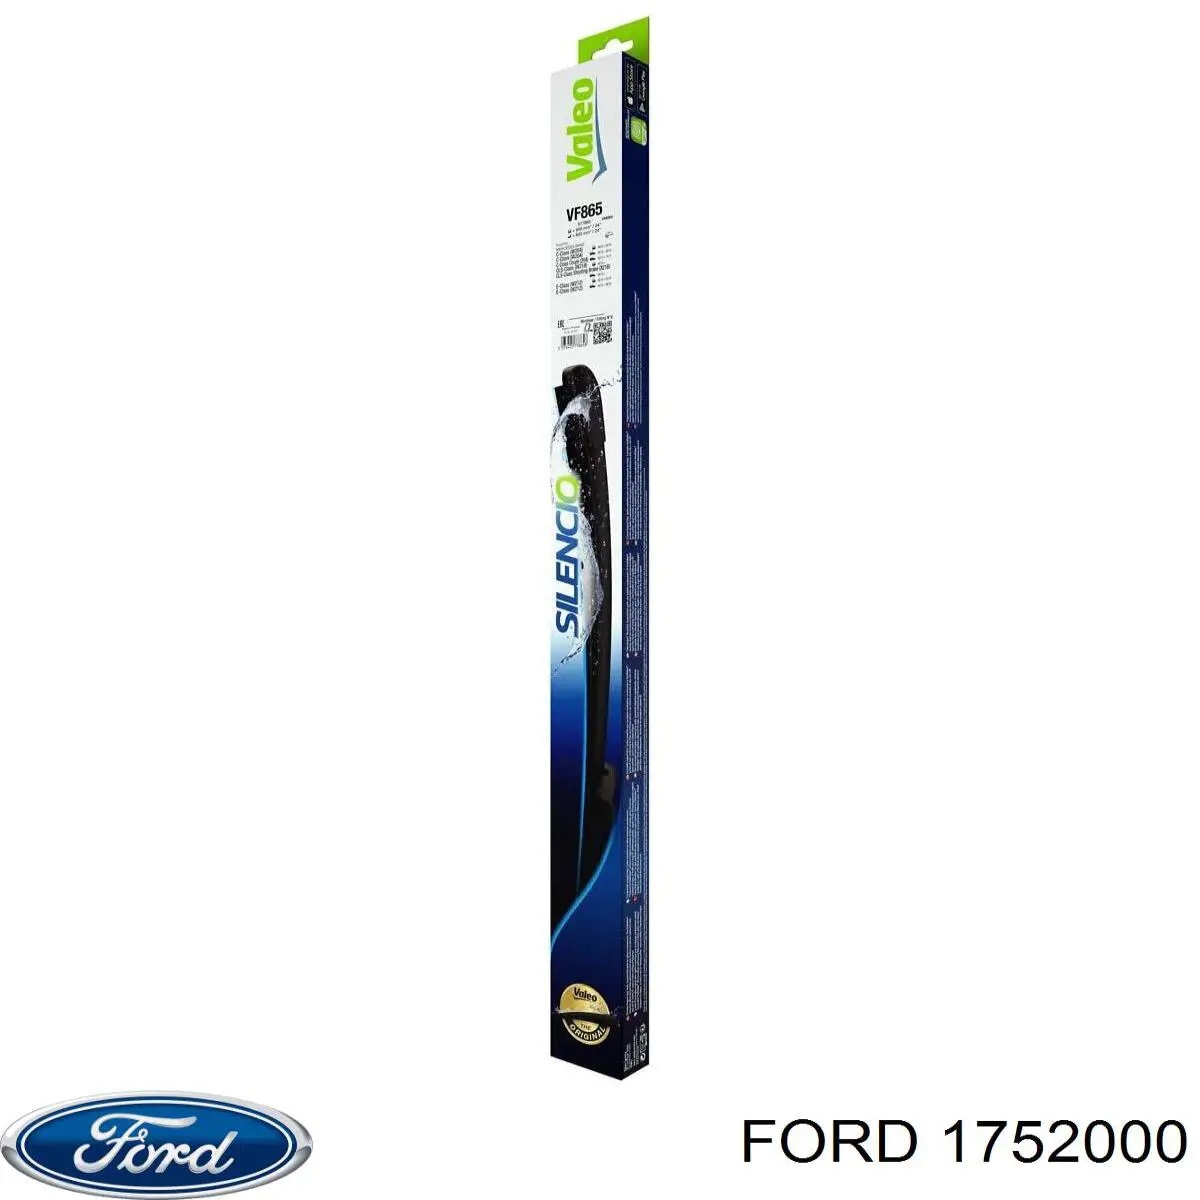 1866210 Ford limpiaparabrisas